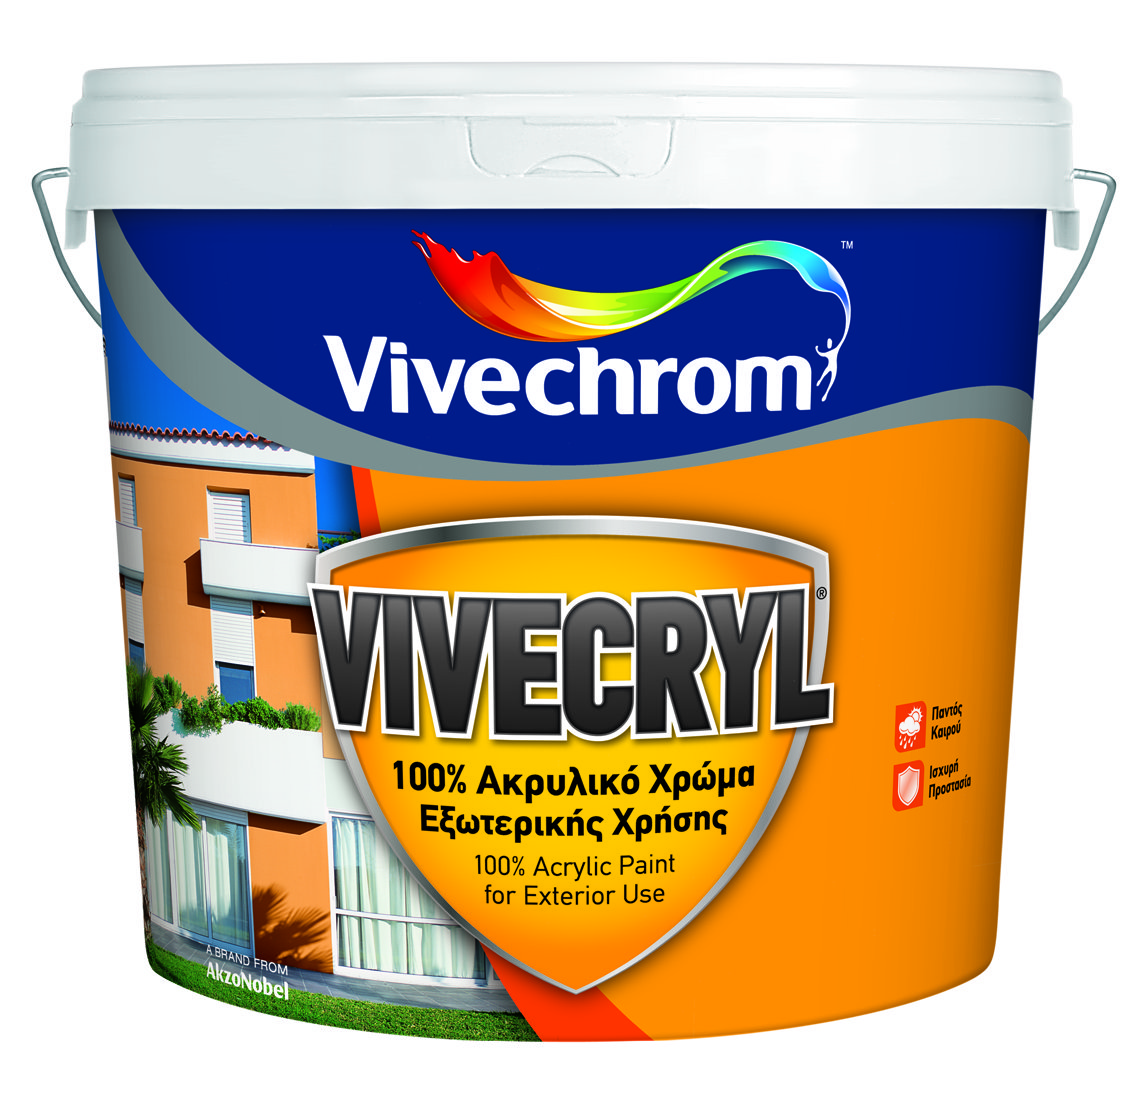 Vivechrom Vivecryl Ακρυλικό Οικολογικό Χρώμα Matt Finish Βάση 10L